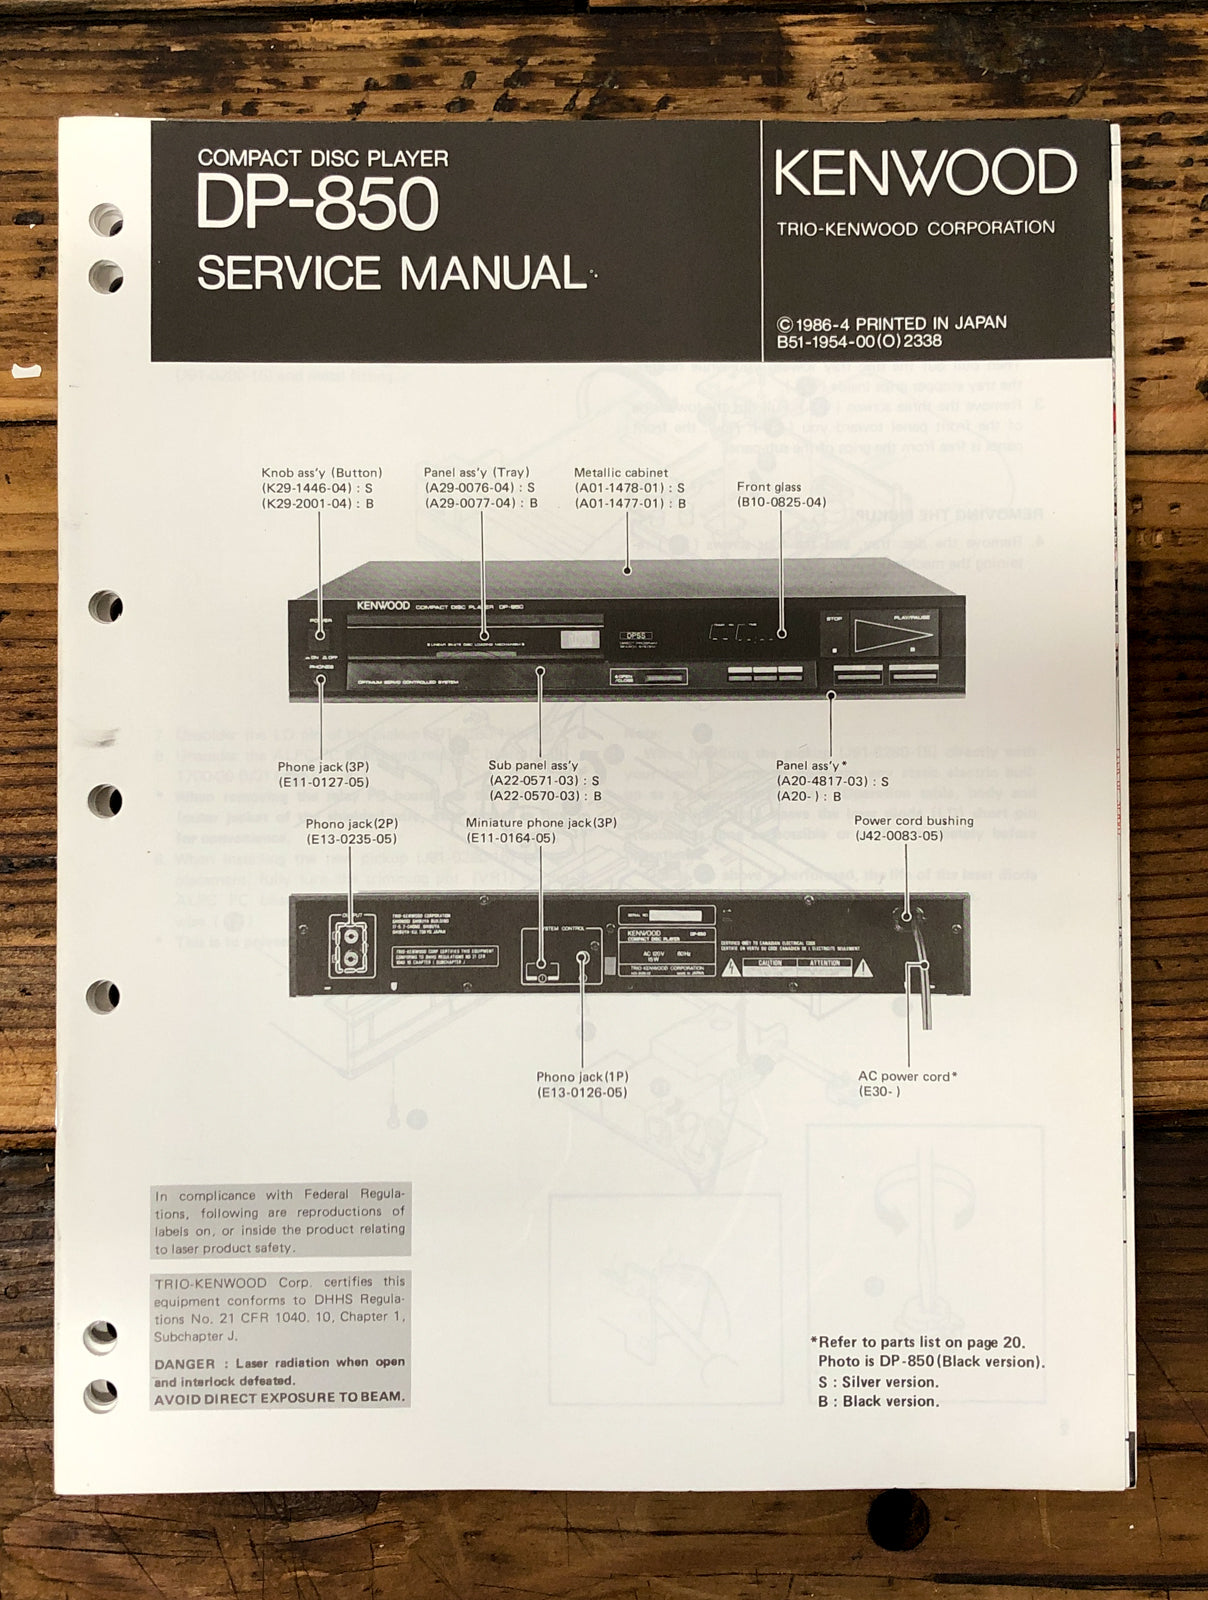 Kenwood DP-850 CD Player  Service Manual *Original*